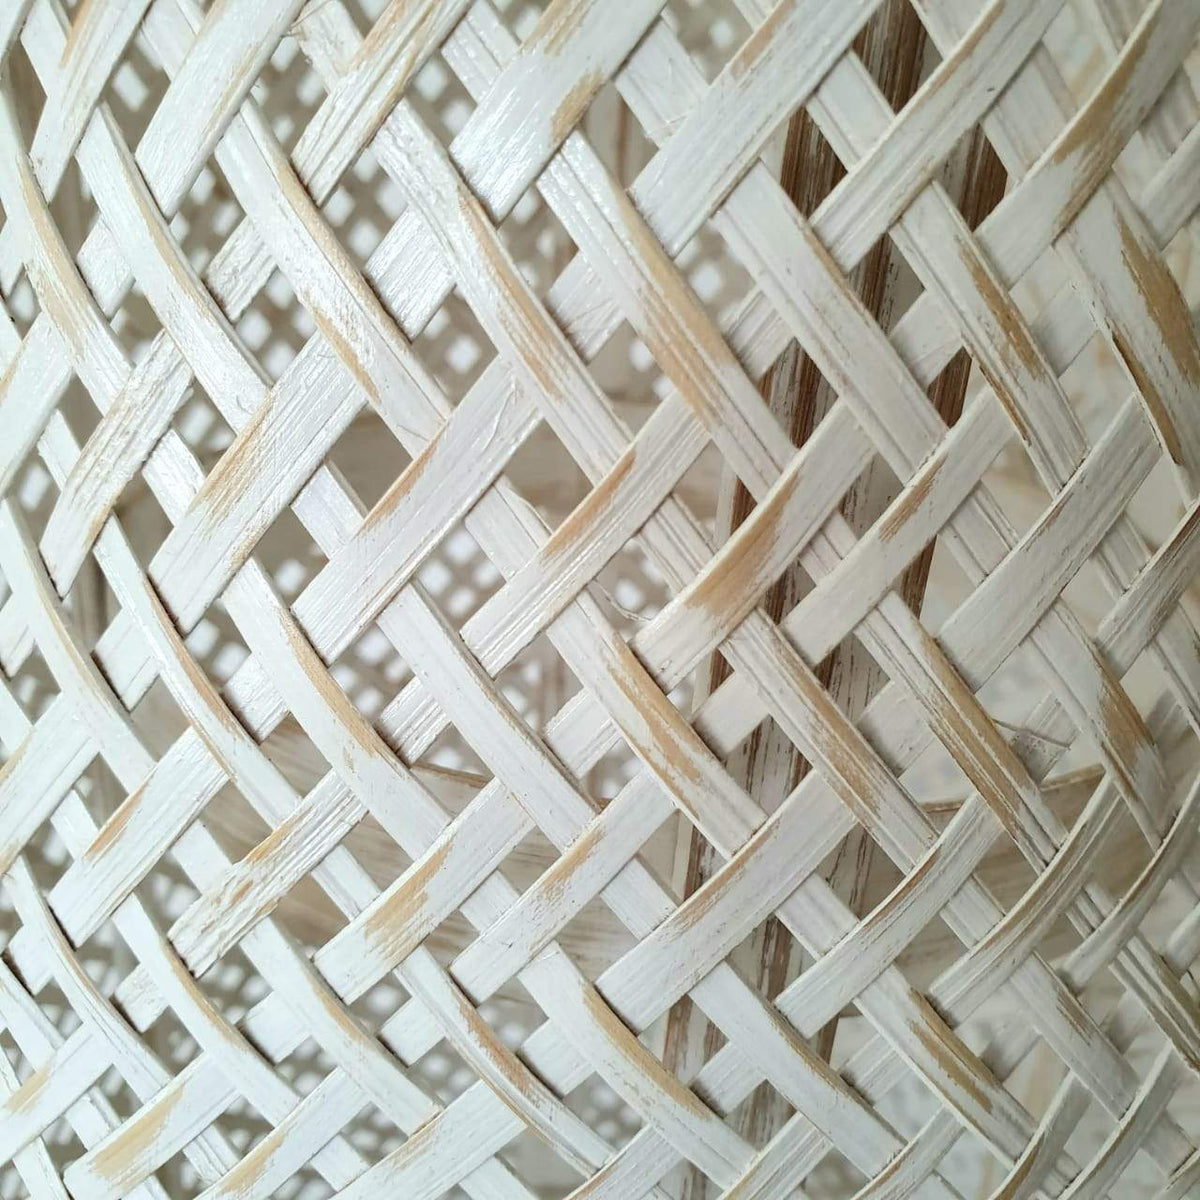 Bamboo Lamp Shade in White